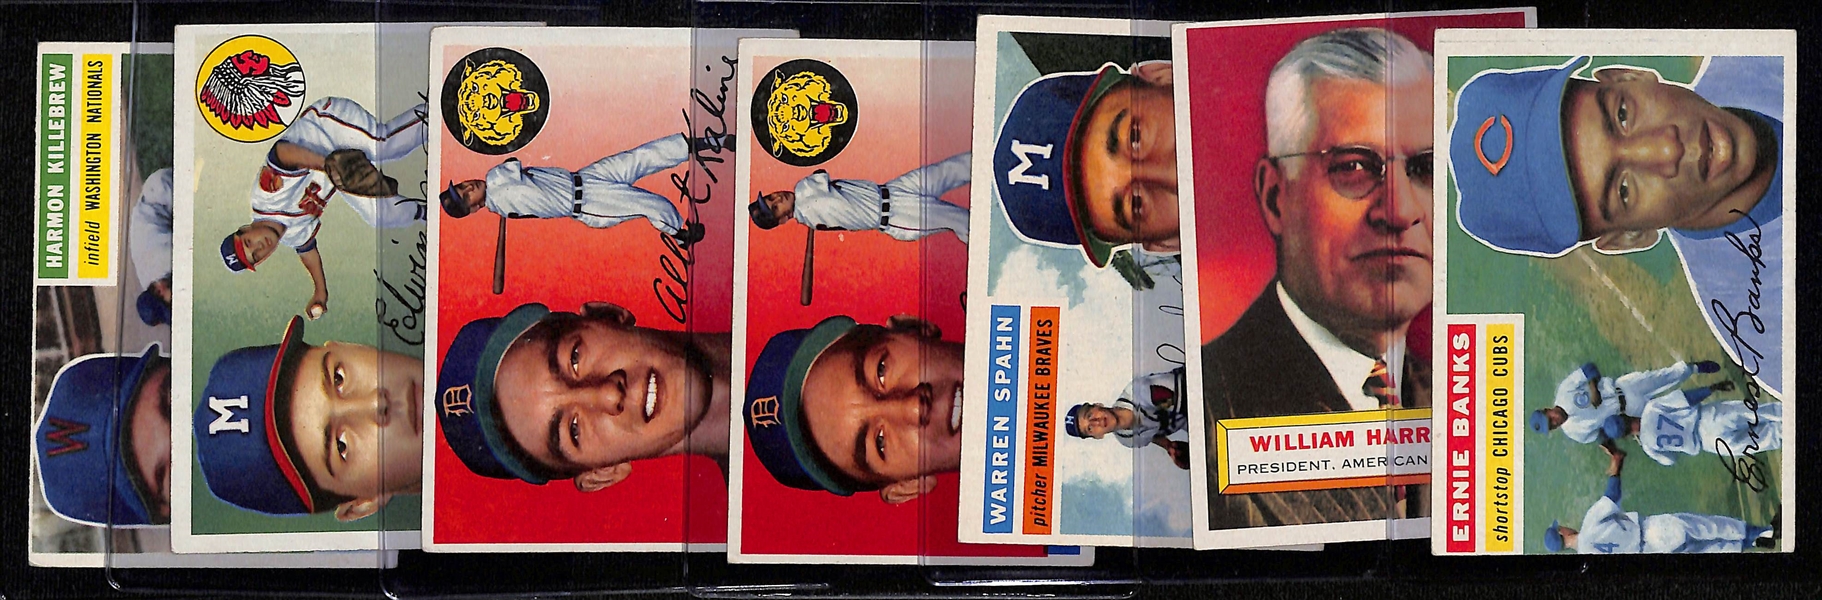 Lot of (6) 1956 Topps Baseball Cards w. Ernie Banks, W. Harridge (Card # 1), Warren Spahn and Others